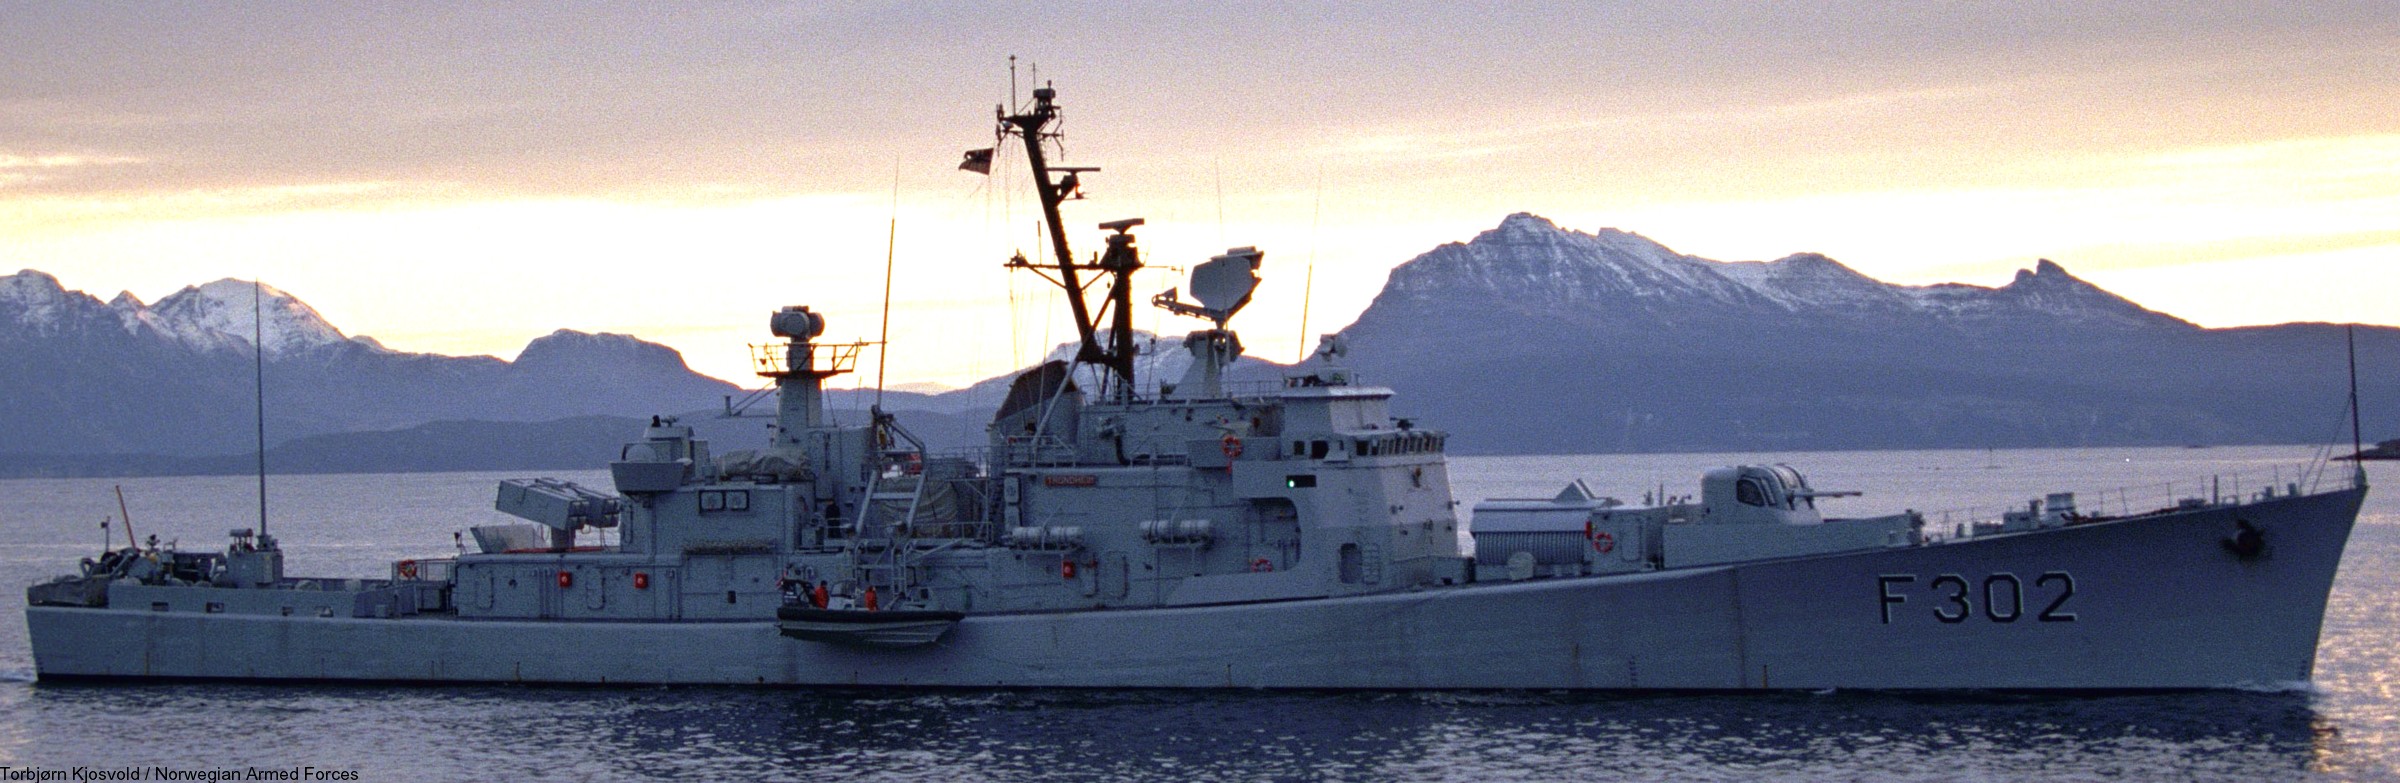 f-302 hnoms trondheim knm oslo class frigate royal norwegian navy sjoforsvaret 02